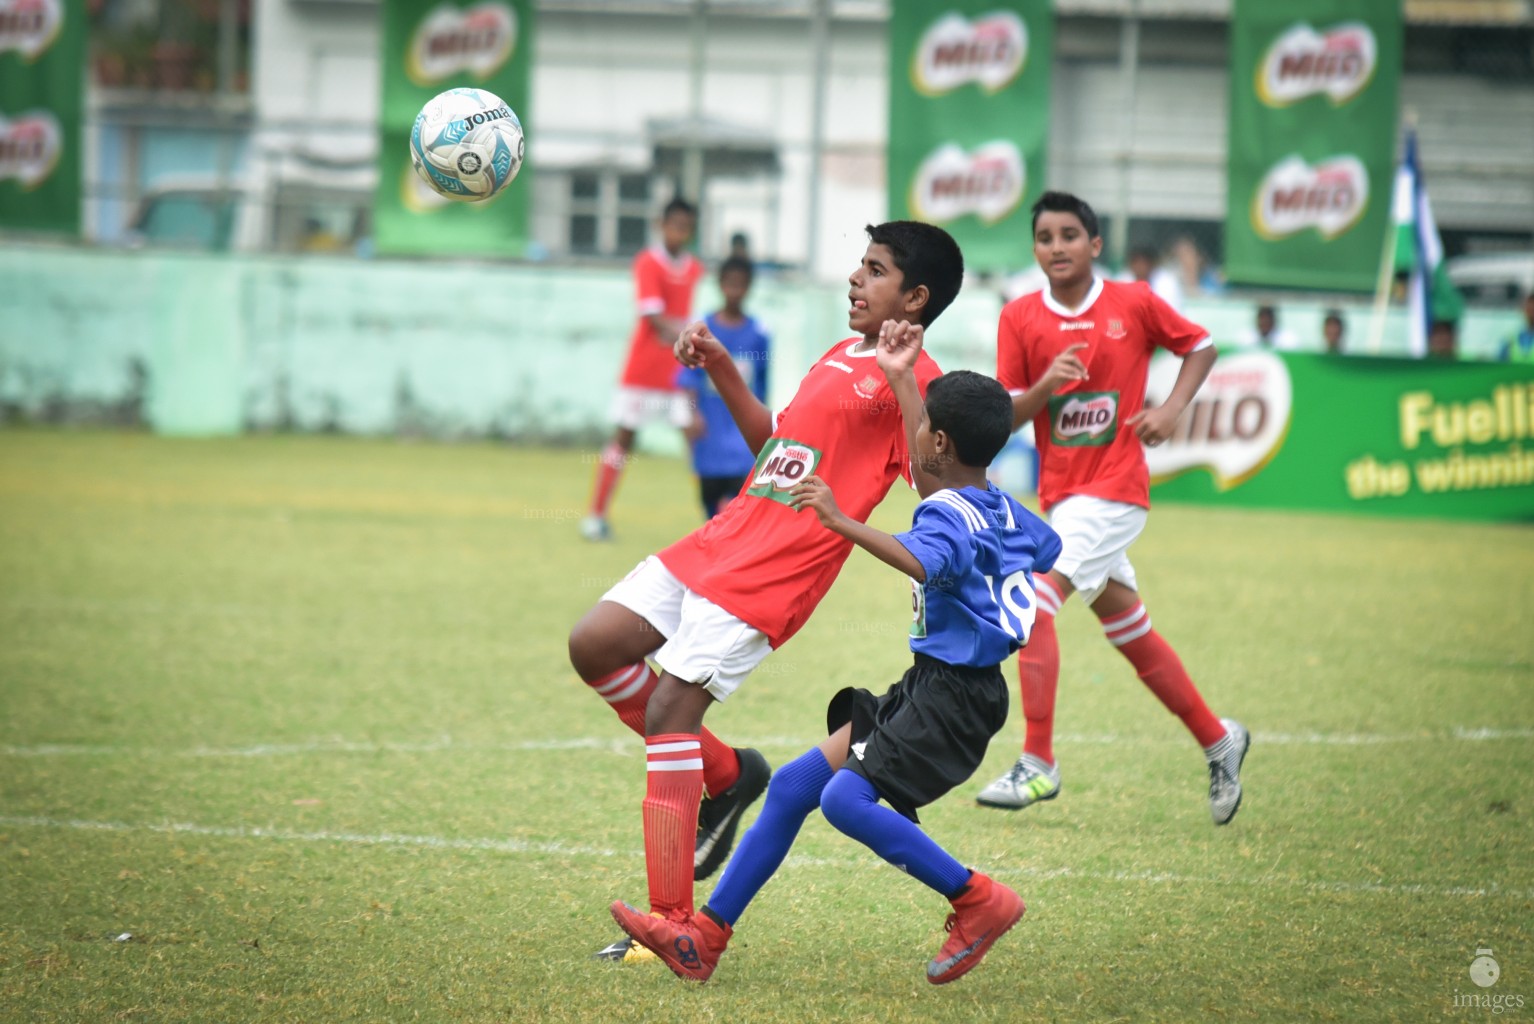 Milo Inter-school Football Tournament / Opening / Under 14 Majeedhiya vs Huraa